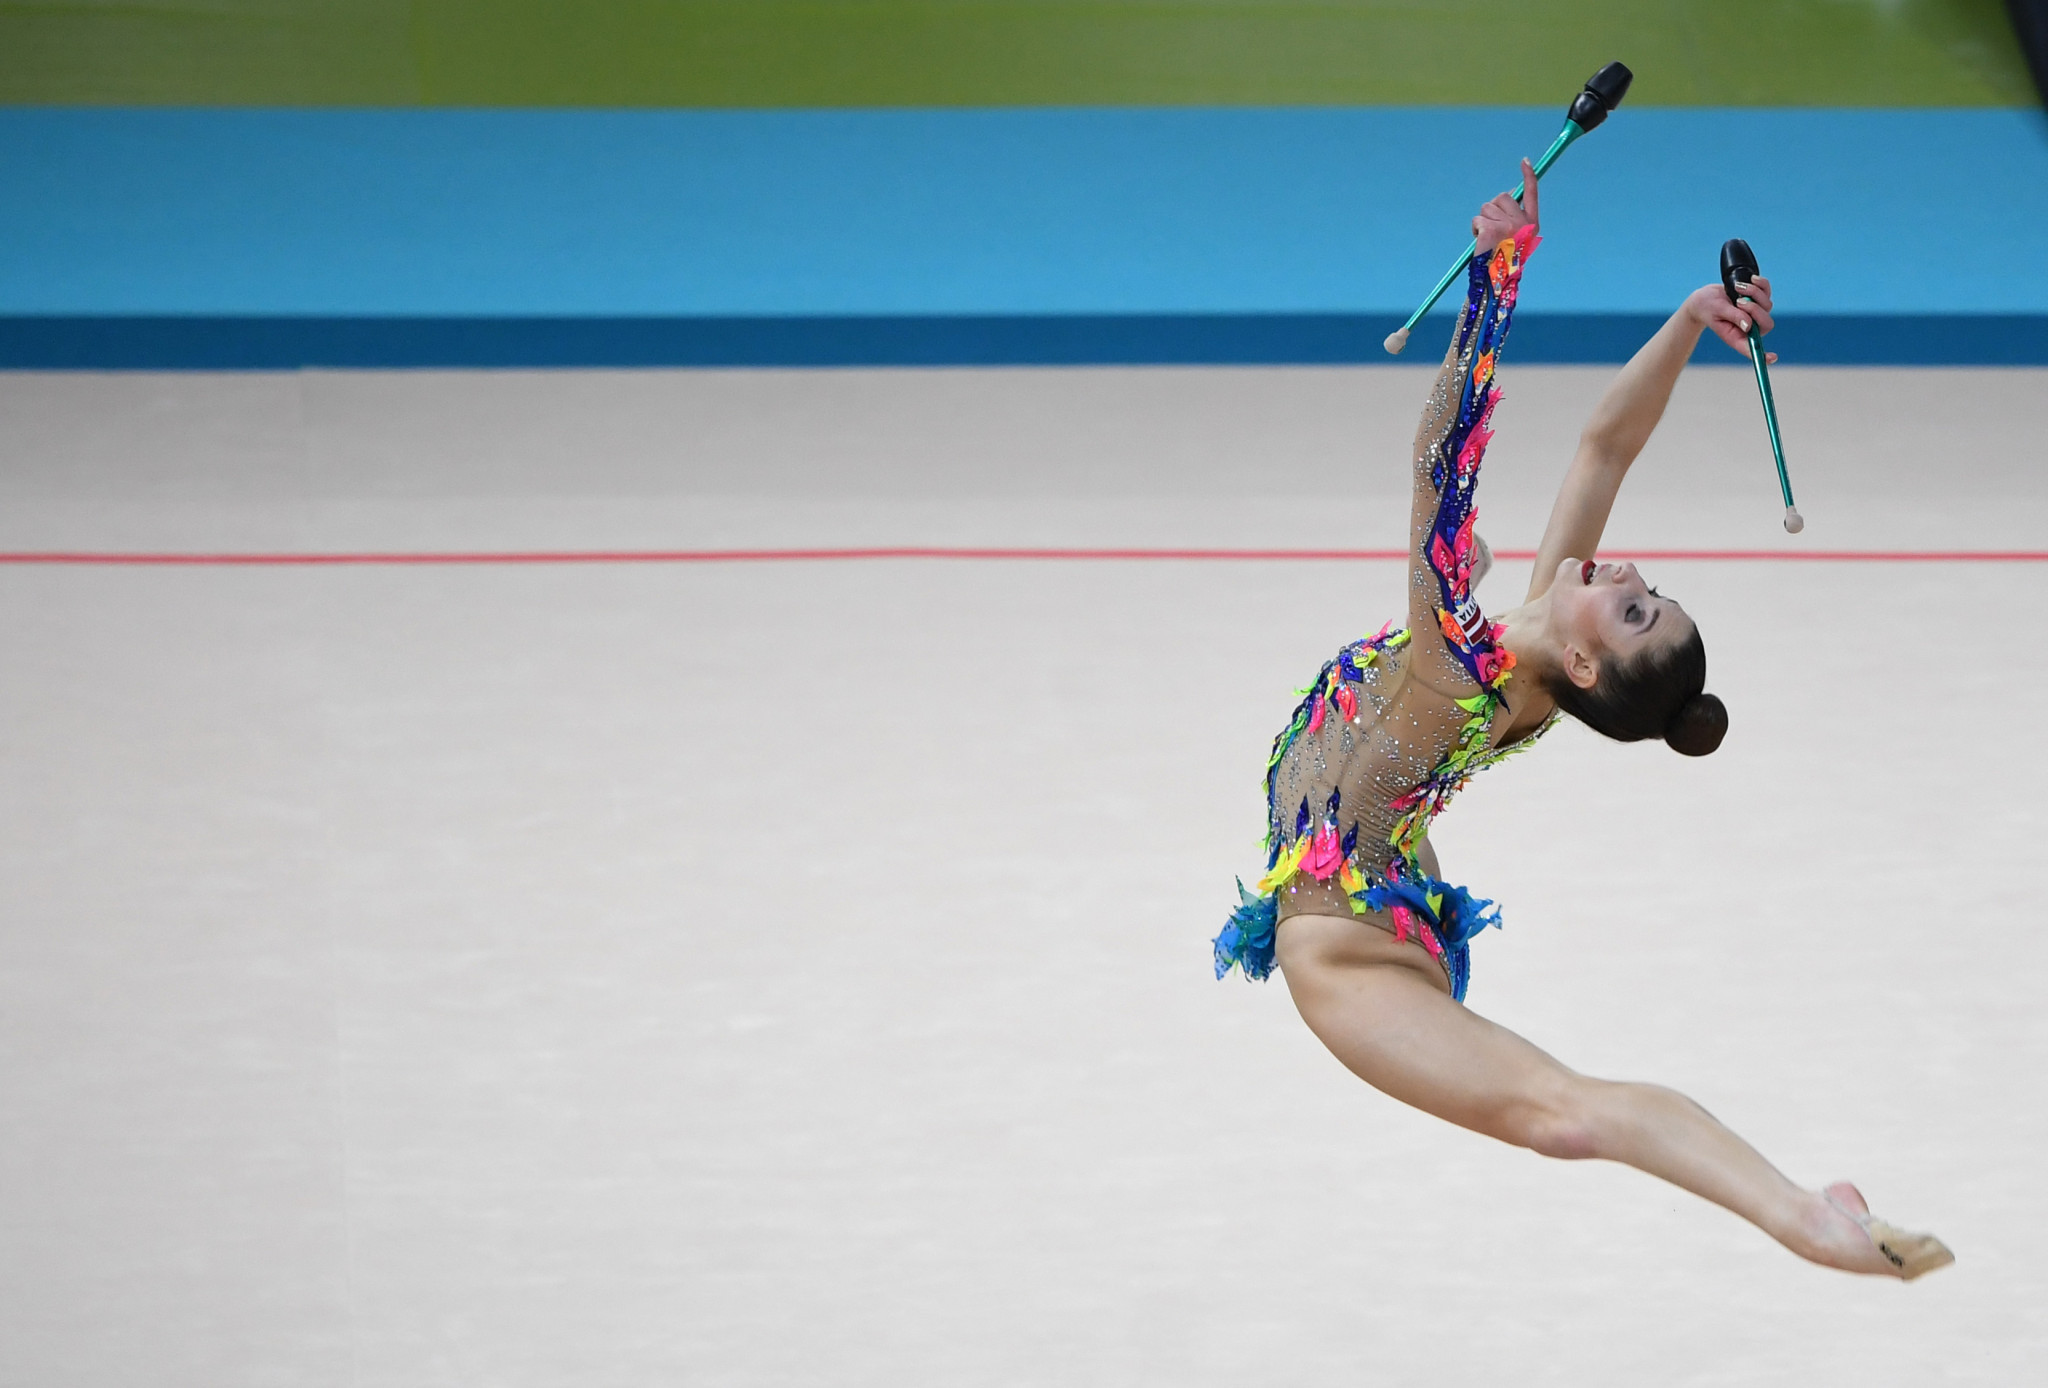 Jelizaveta Polstjanaja has represented Latvia in international competition since 2018 ©Getty Images